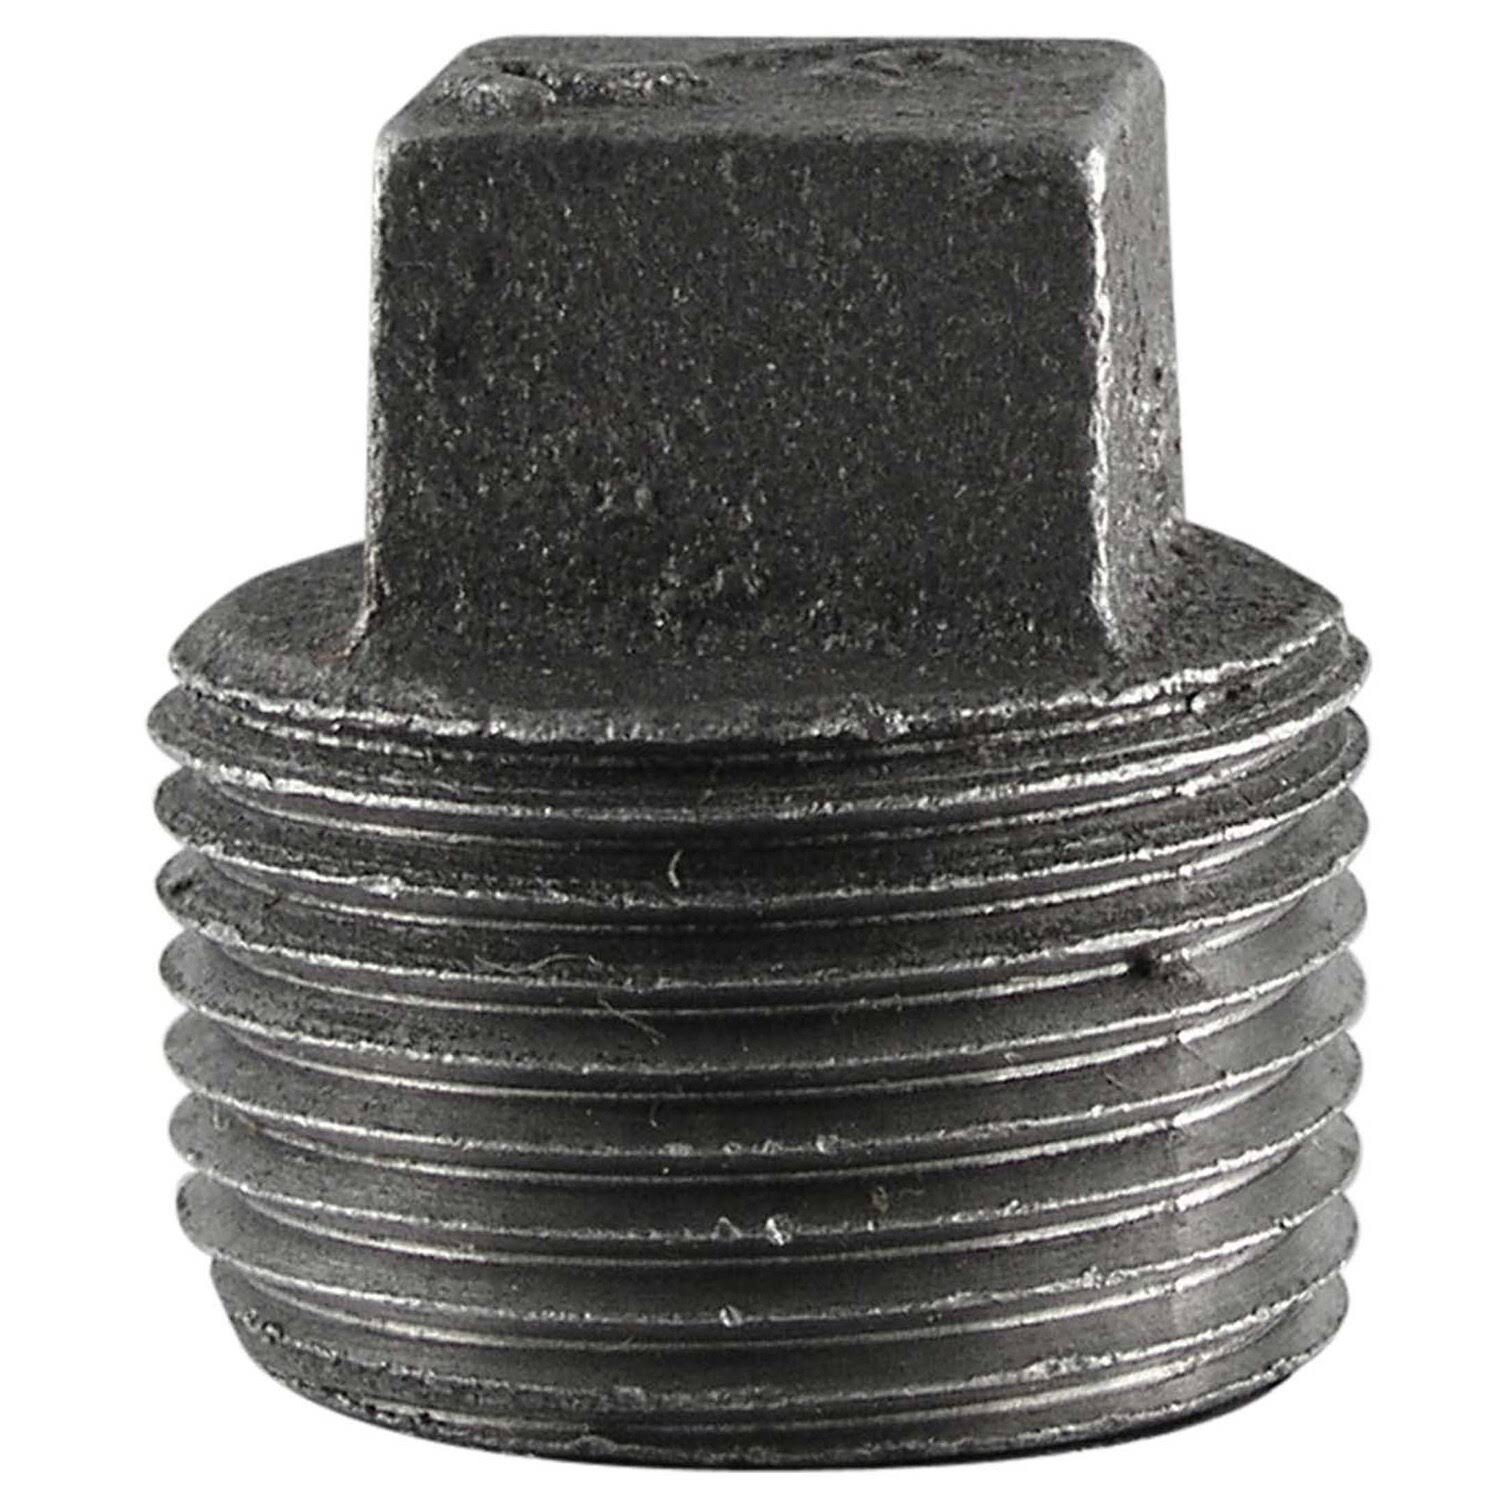 Mueller Industries Iron Plug - Black